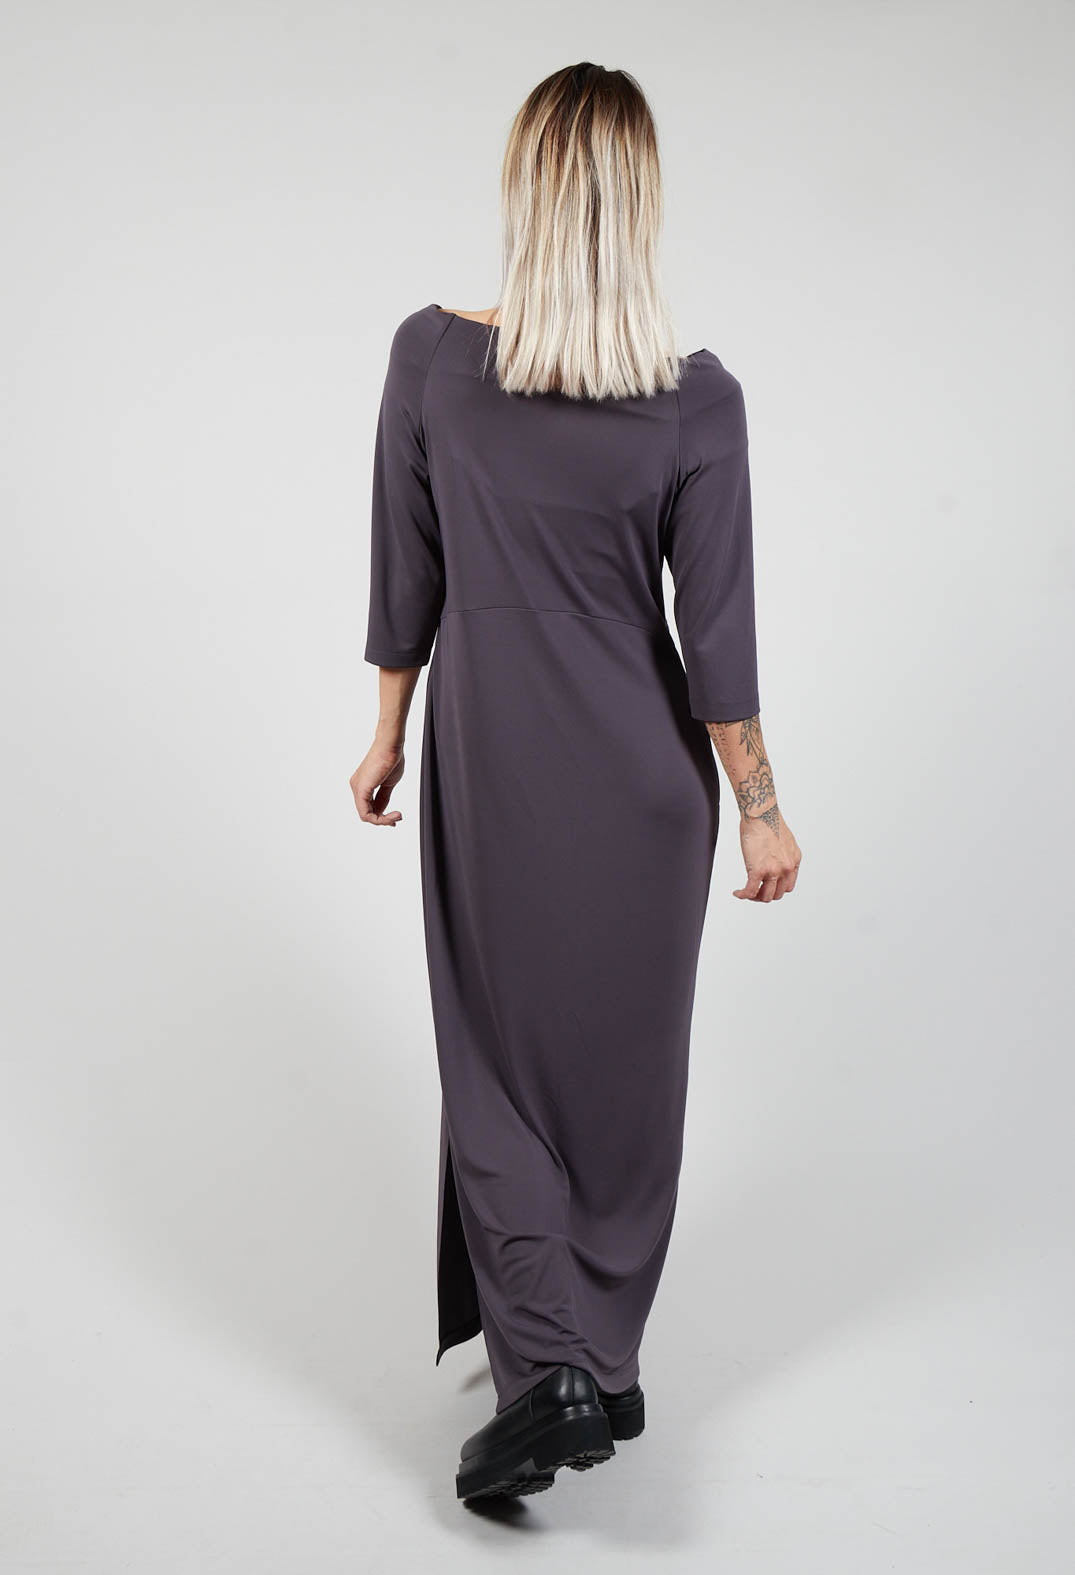 Long Dress with Three Quarter Length Sleeves in Dark Grey